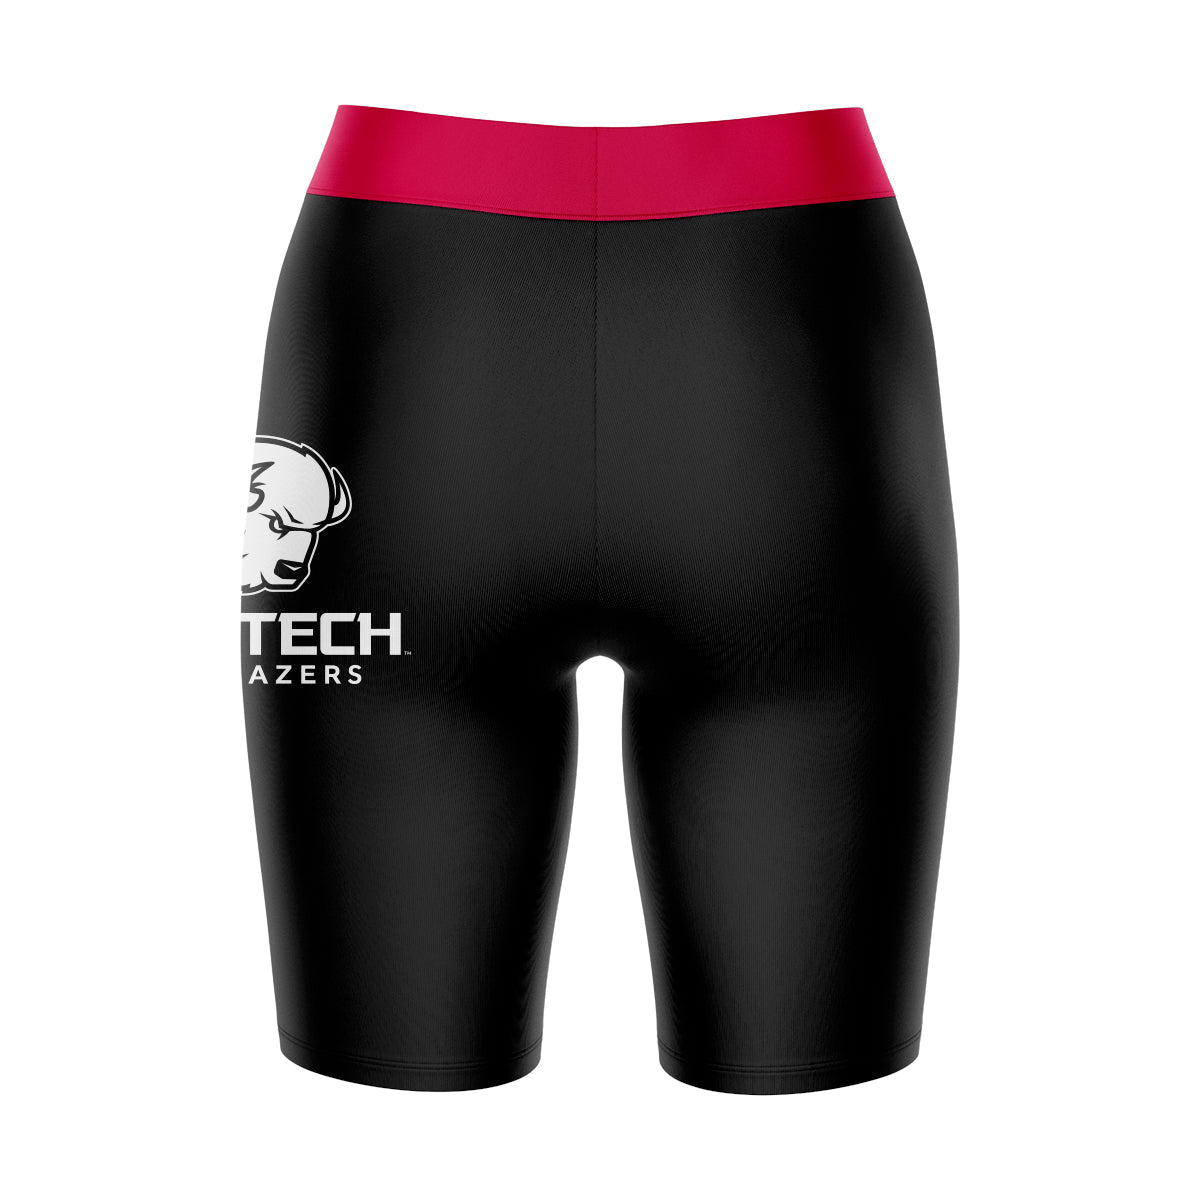 Utah Tech Trailblazers Vive La Fete Game Day Logo on Thigh and Waistband Black and Red Women Bike Short 9 Inseam